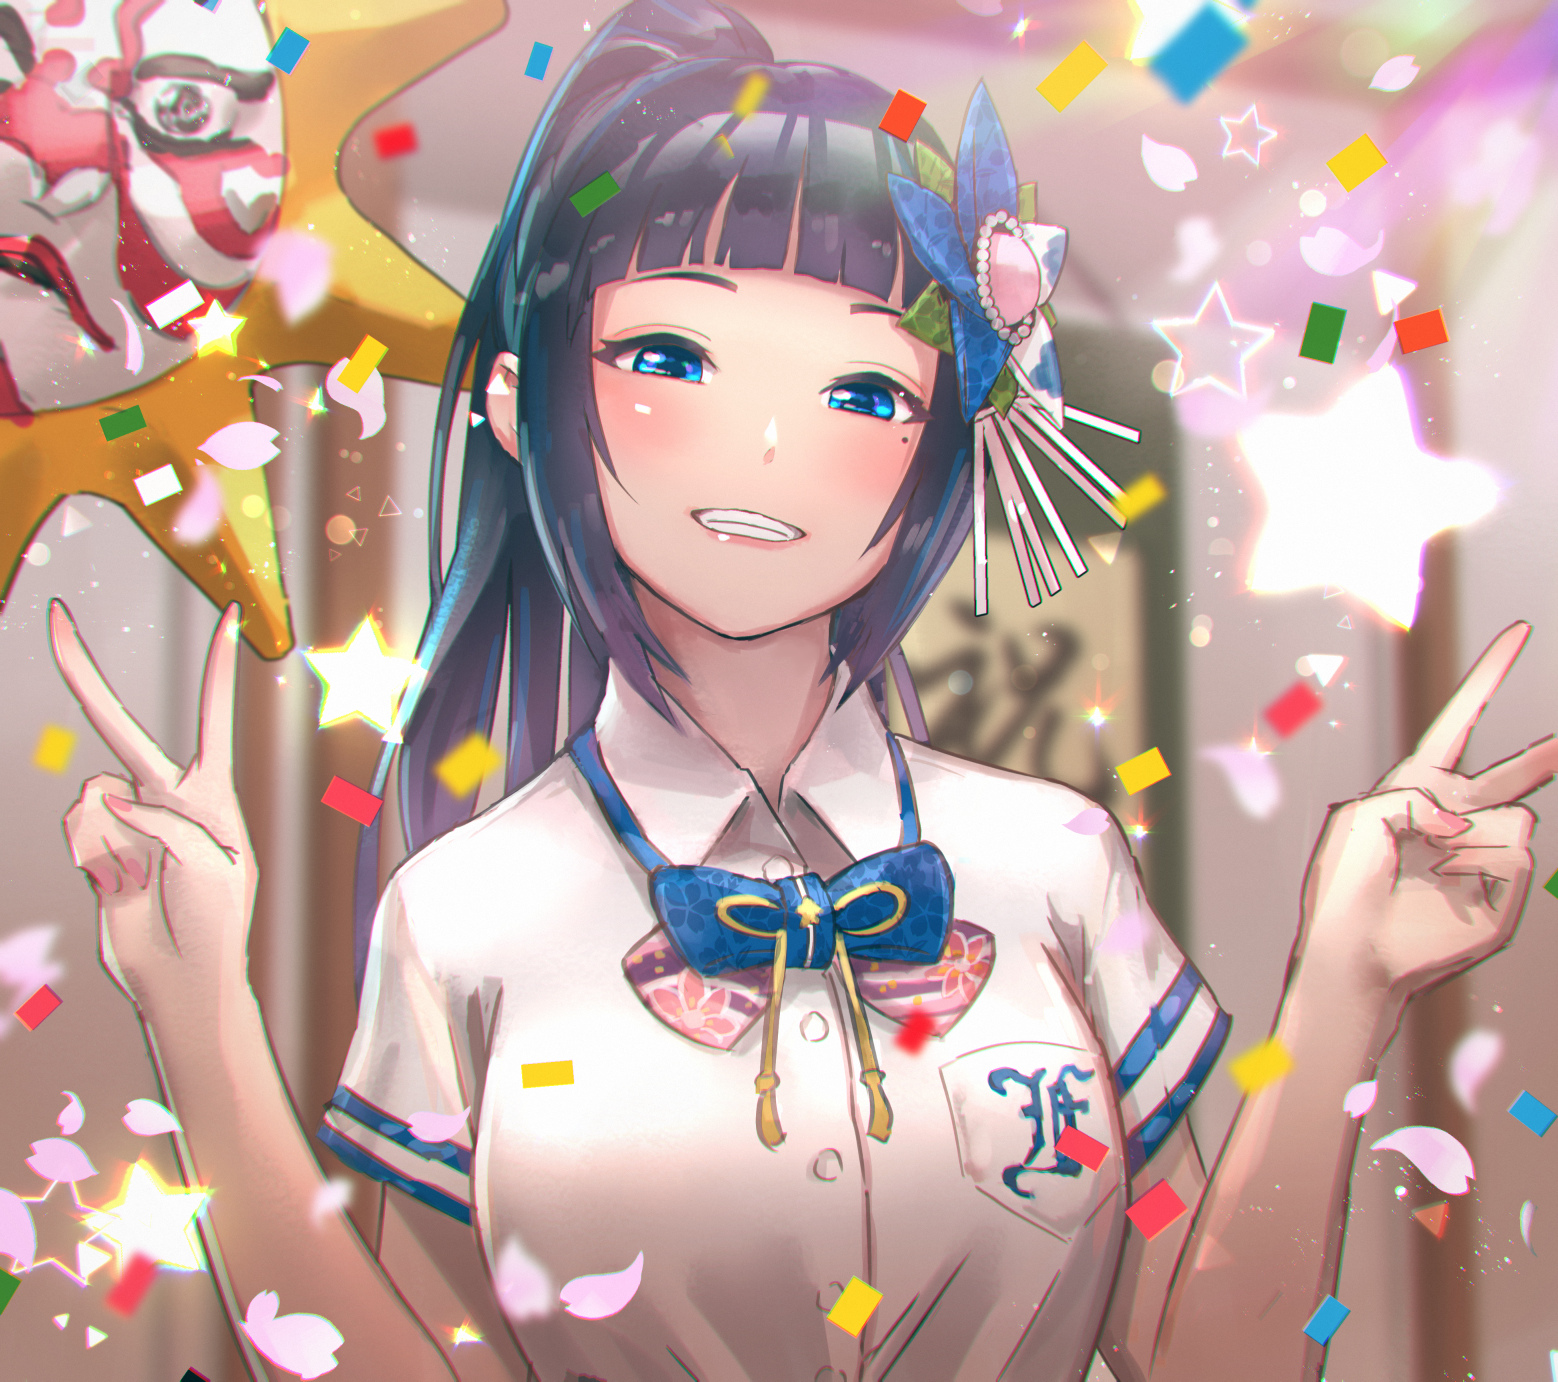 Anime Girls Virtual Youtuber Dark Blue Hair Ponytail Blue Eyes Smiling Shirt Bow Tie Peace Sign Dept 1558x1382